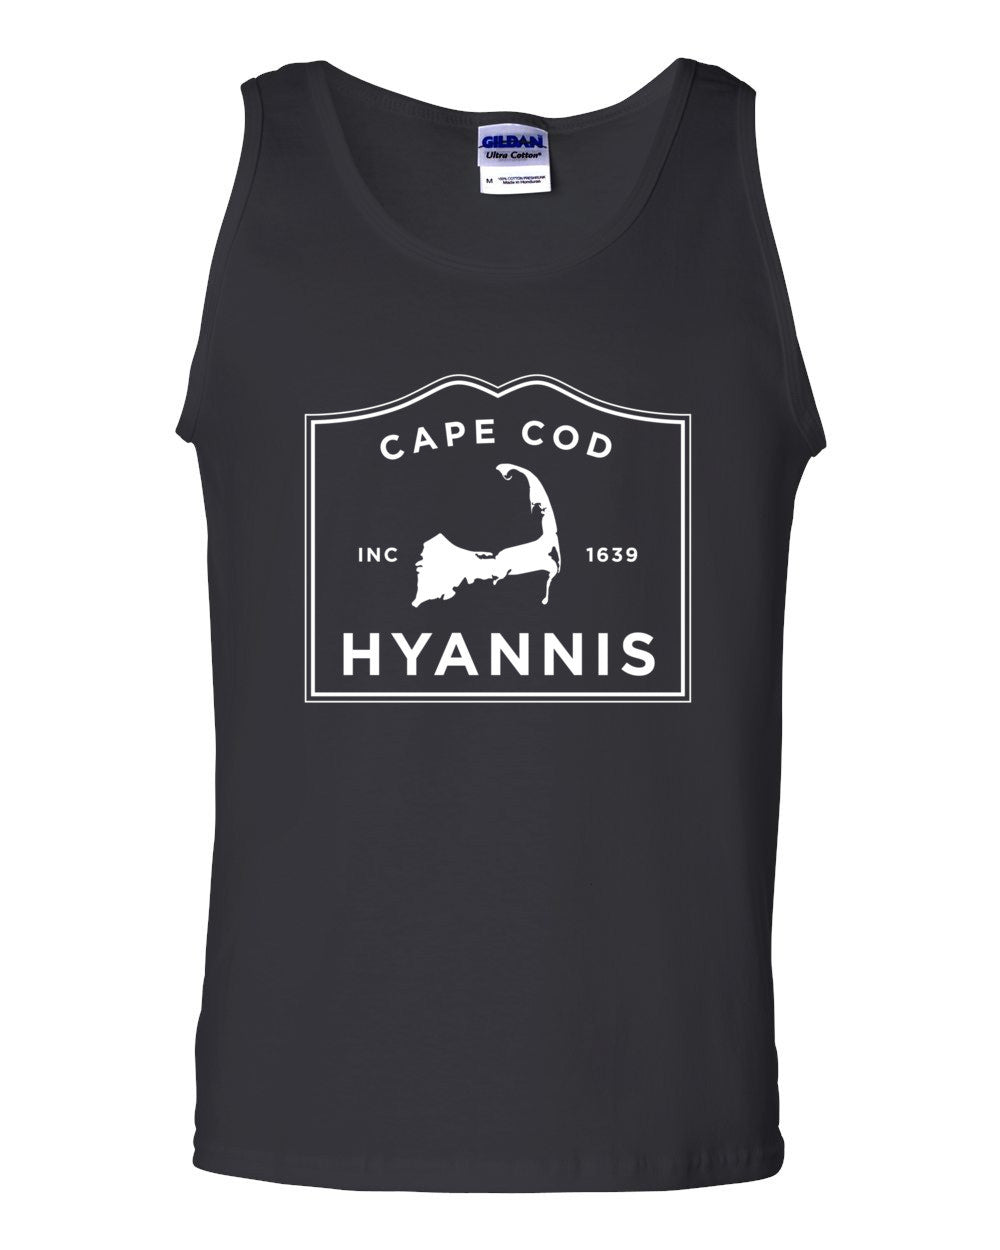 Hyannis Cape Cod Tank Top